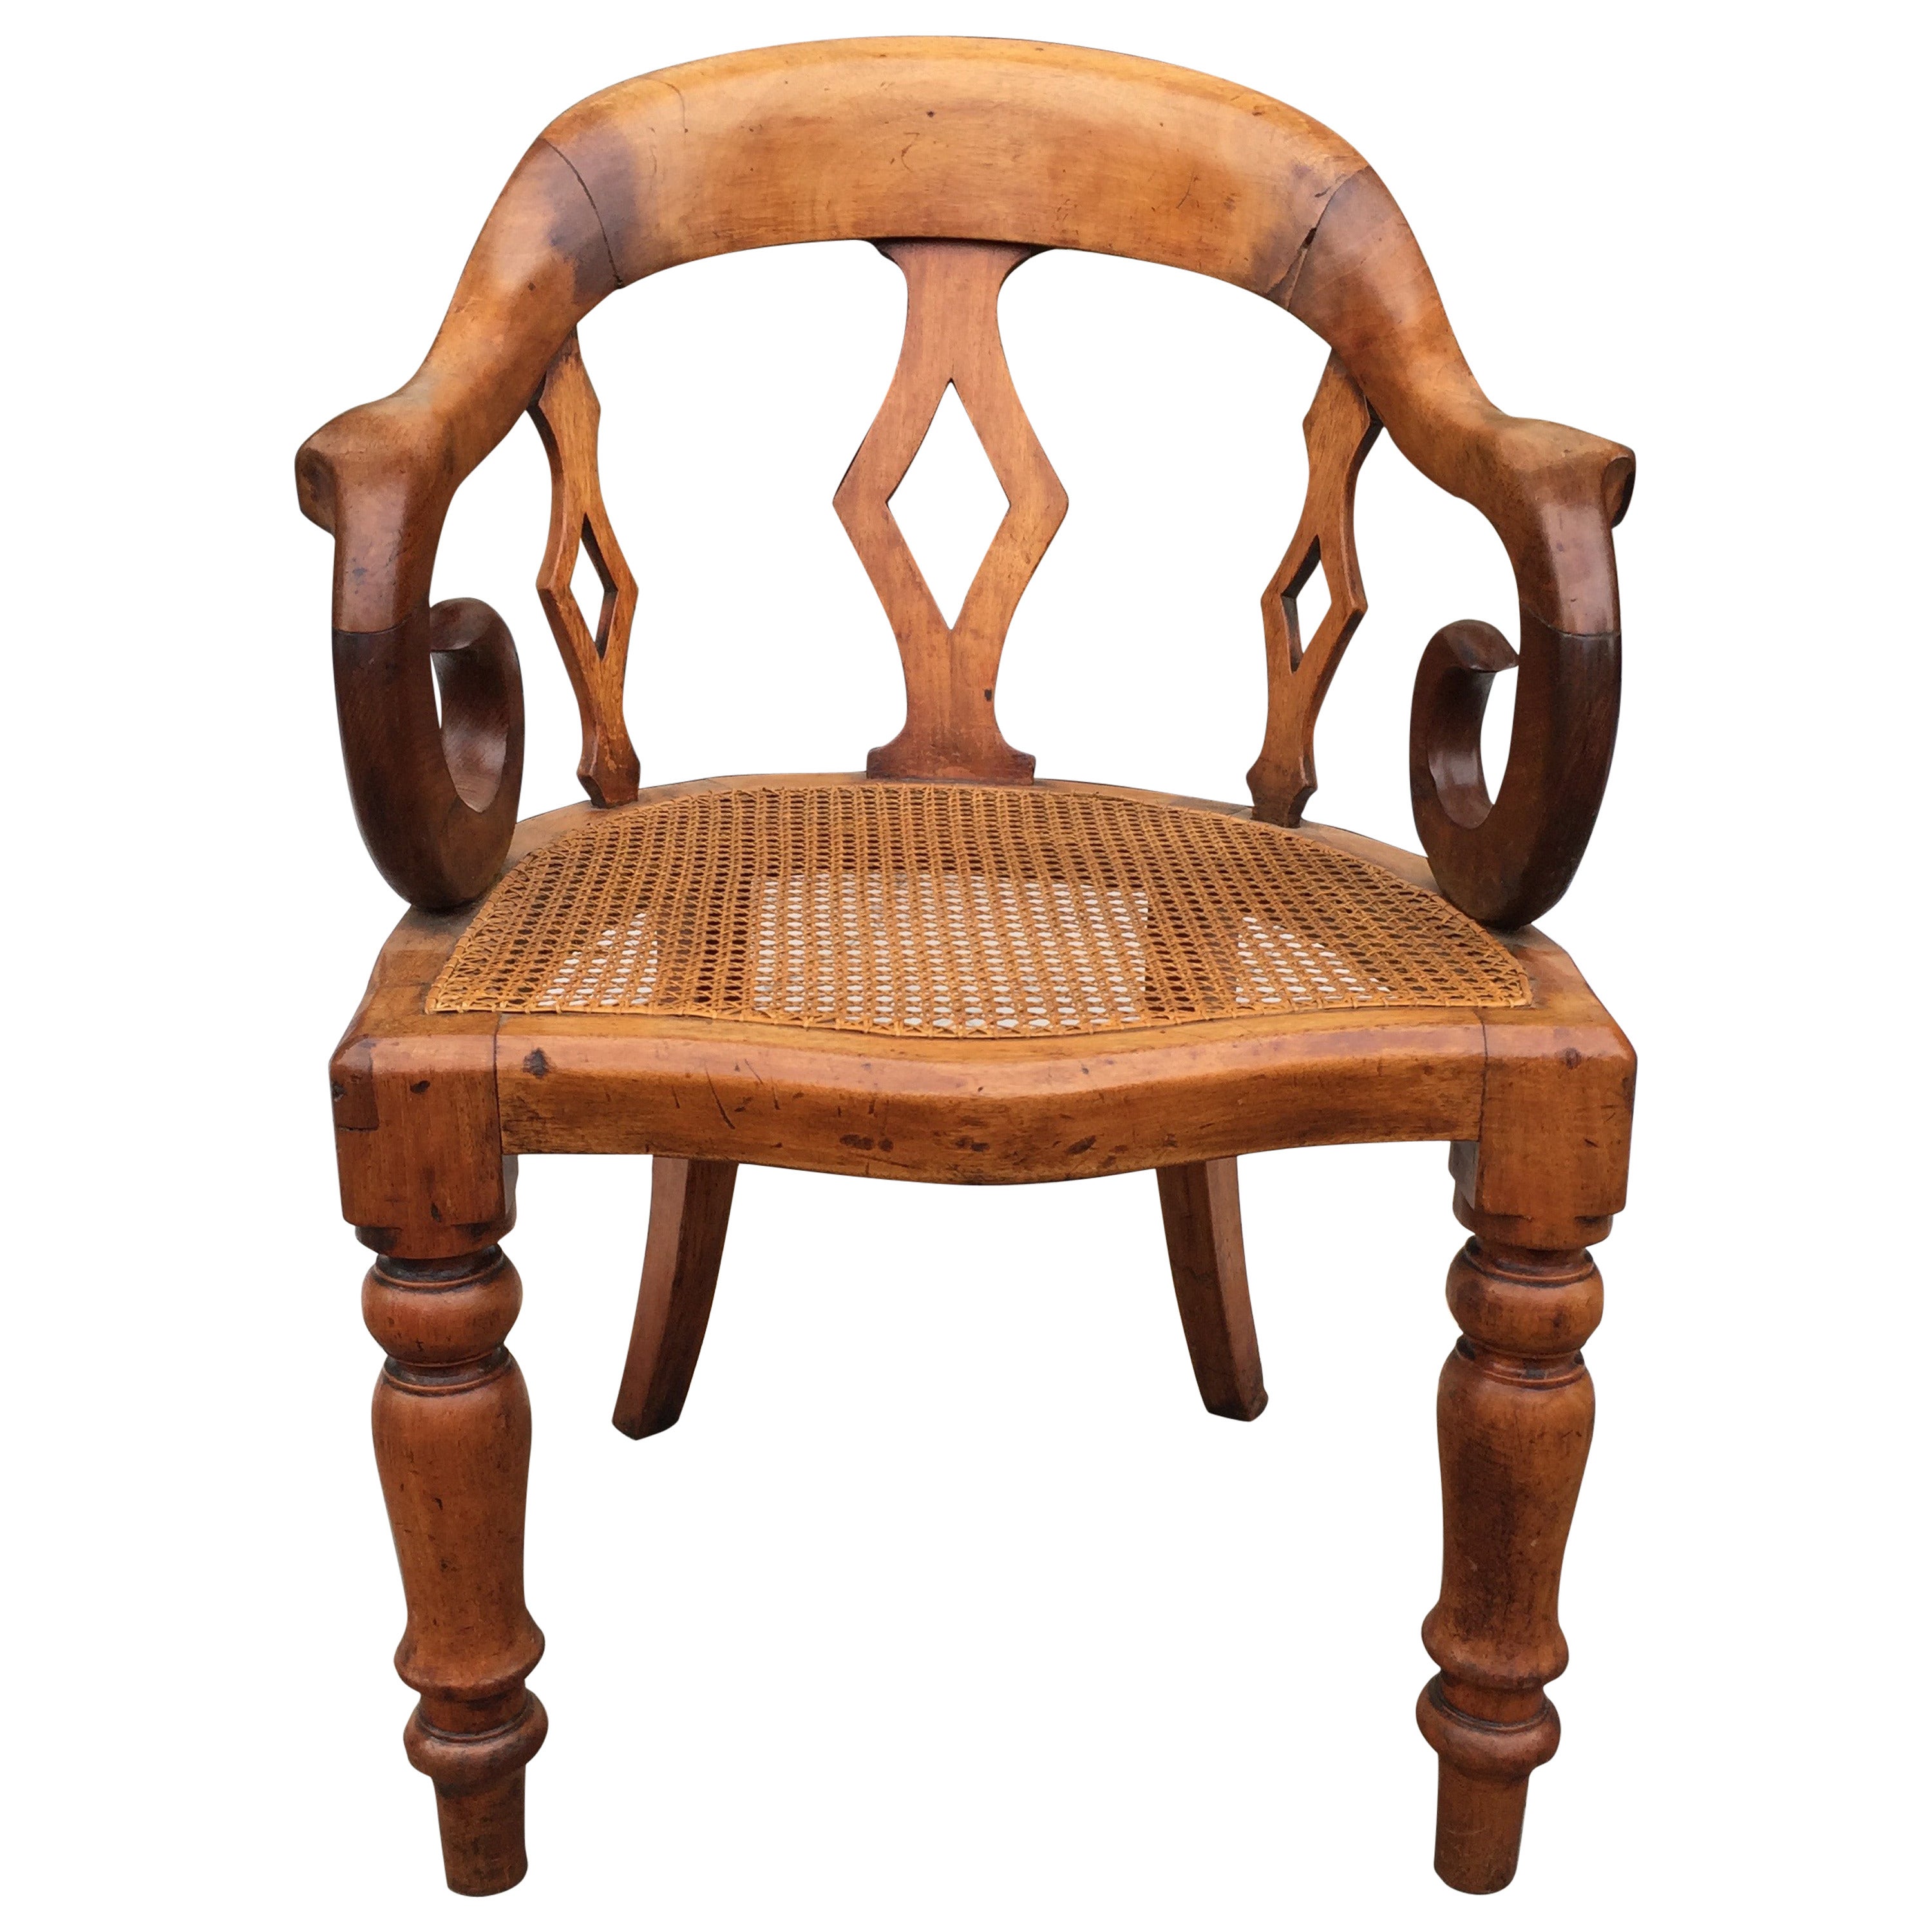 19th century English walnut with cane bottom arm chair